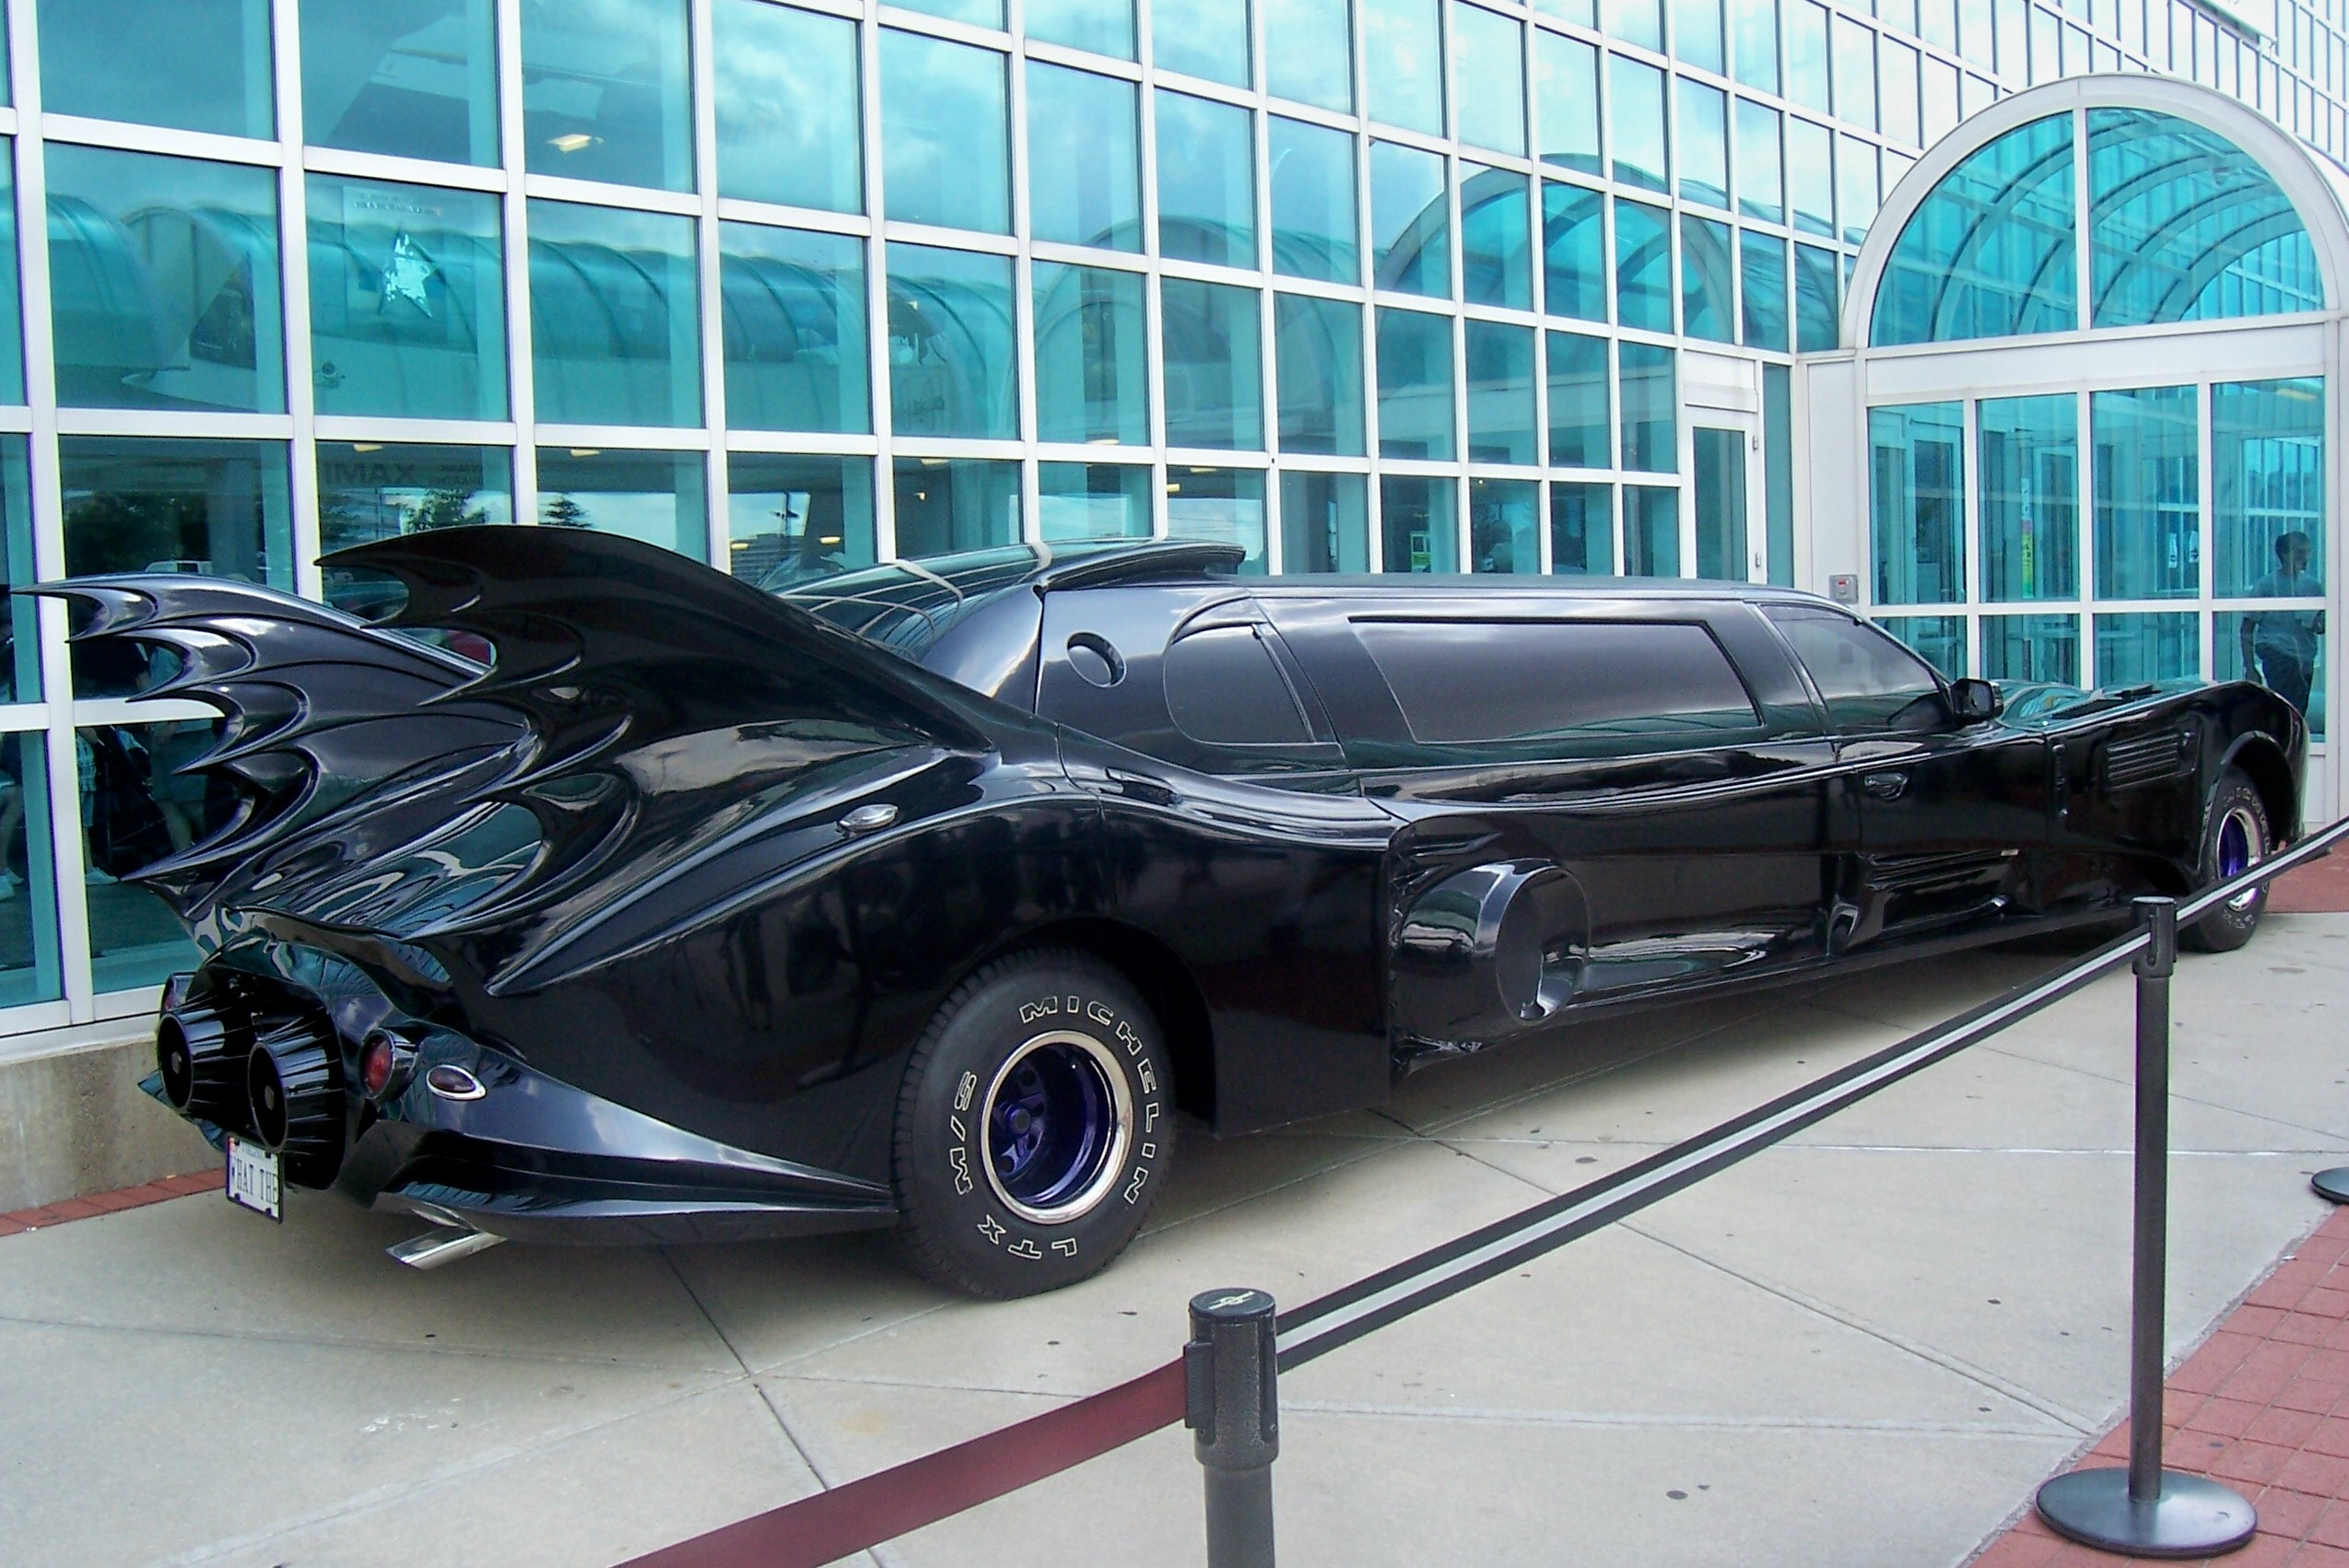 The Batmobile Limousine